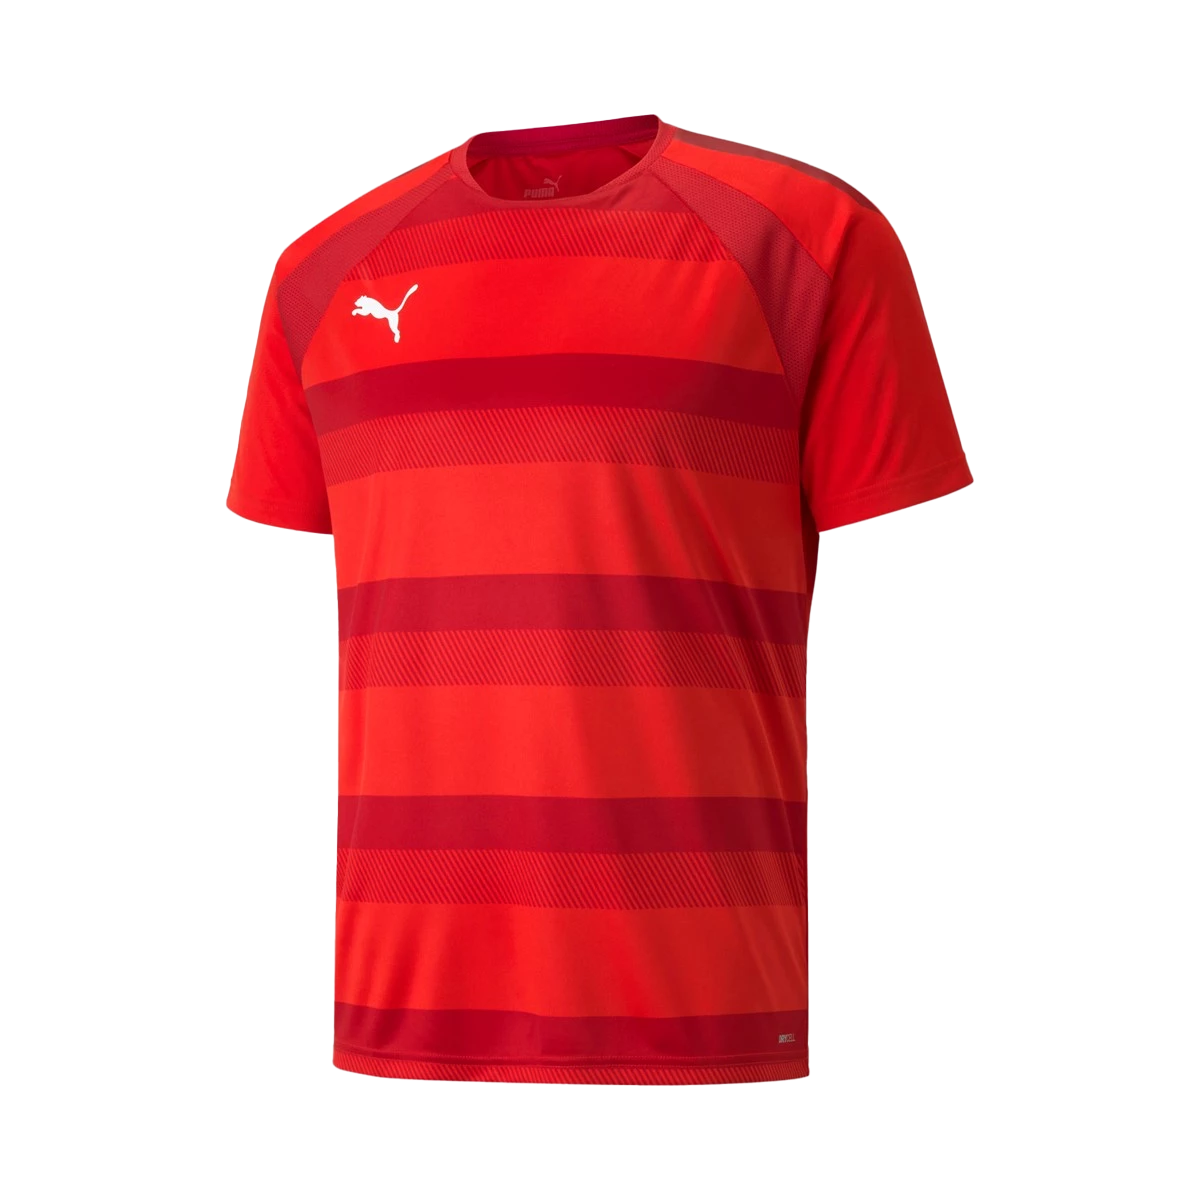 Puma Team Liga Vision Jersey - Red